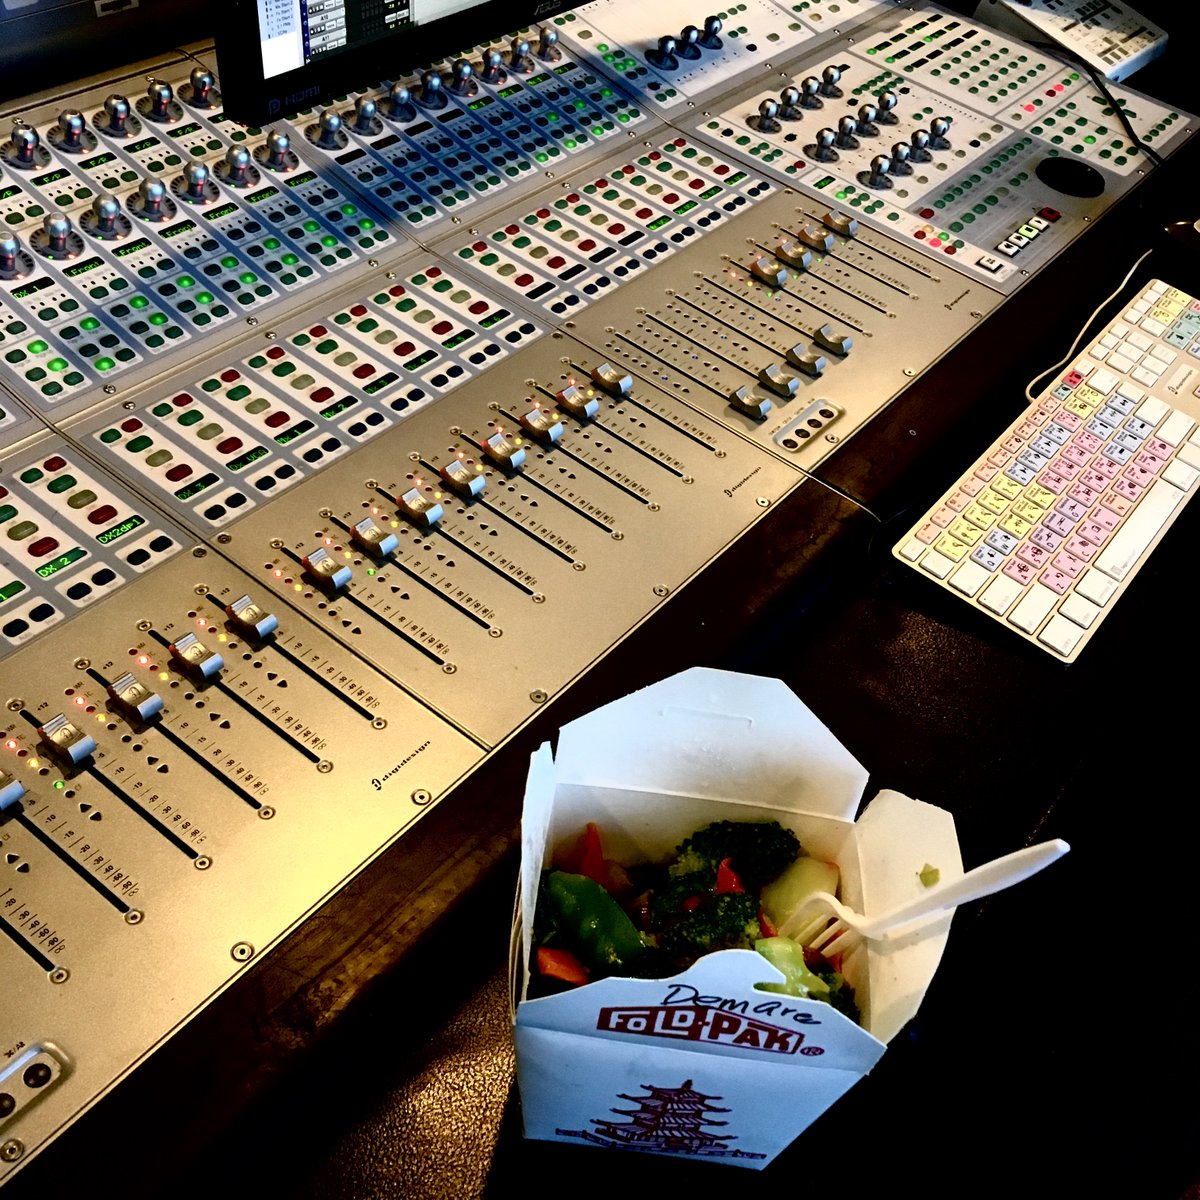 Cuz...Vegetables!

#mixingsession #mix #vegetables #dcommand #avid #protools #trailers #studiolife #chinesefood #studiofood  #cafeaudio